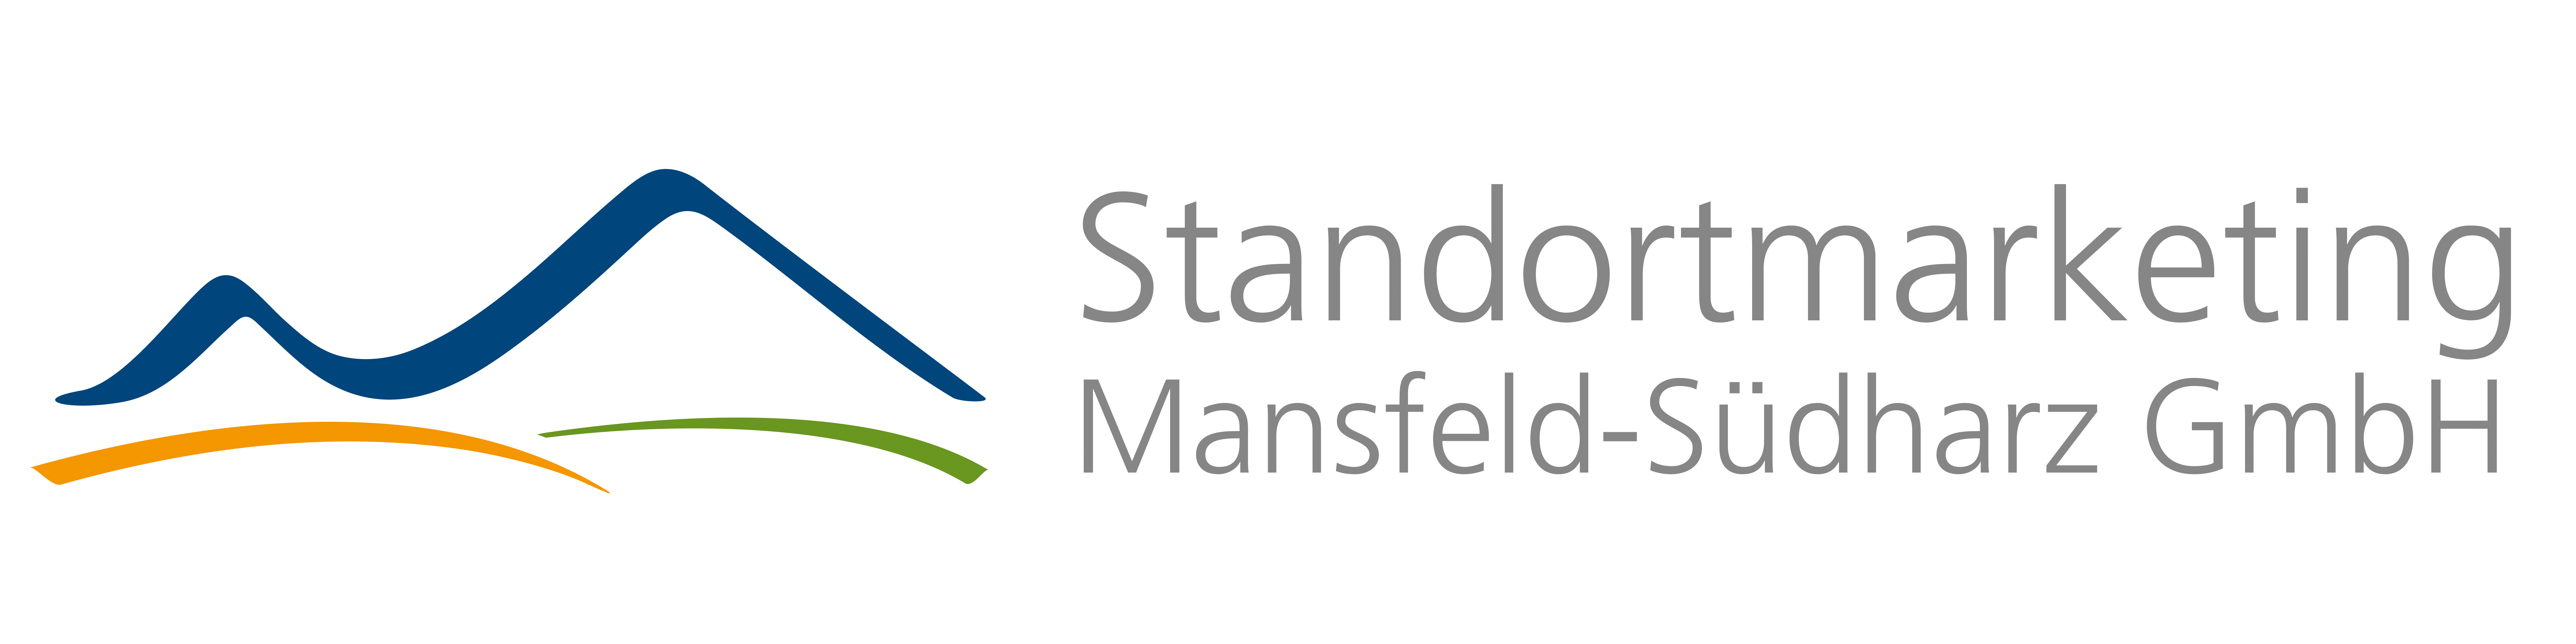 SMG, Standortmarketing Mansfeld-Südharz GmbH